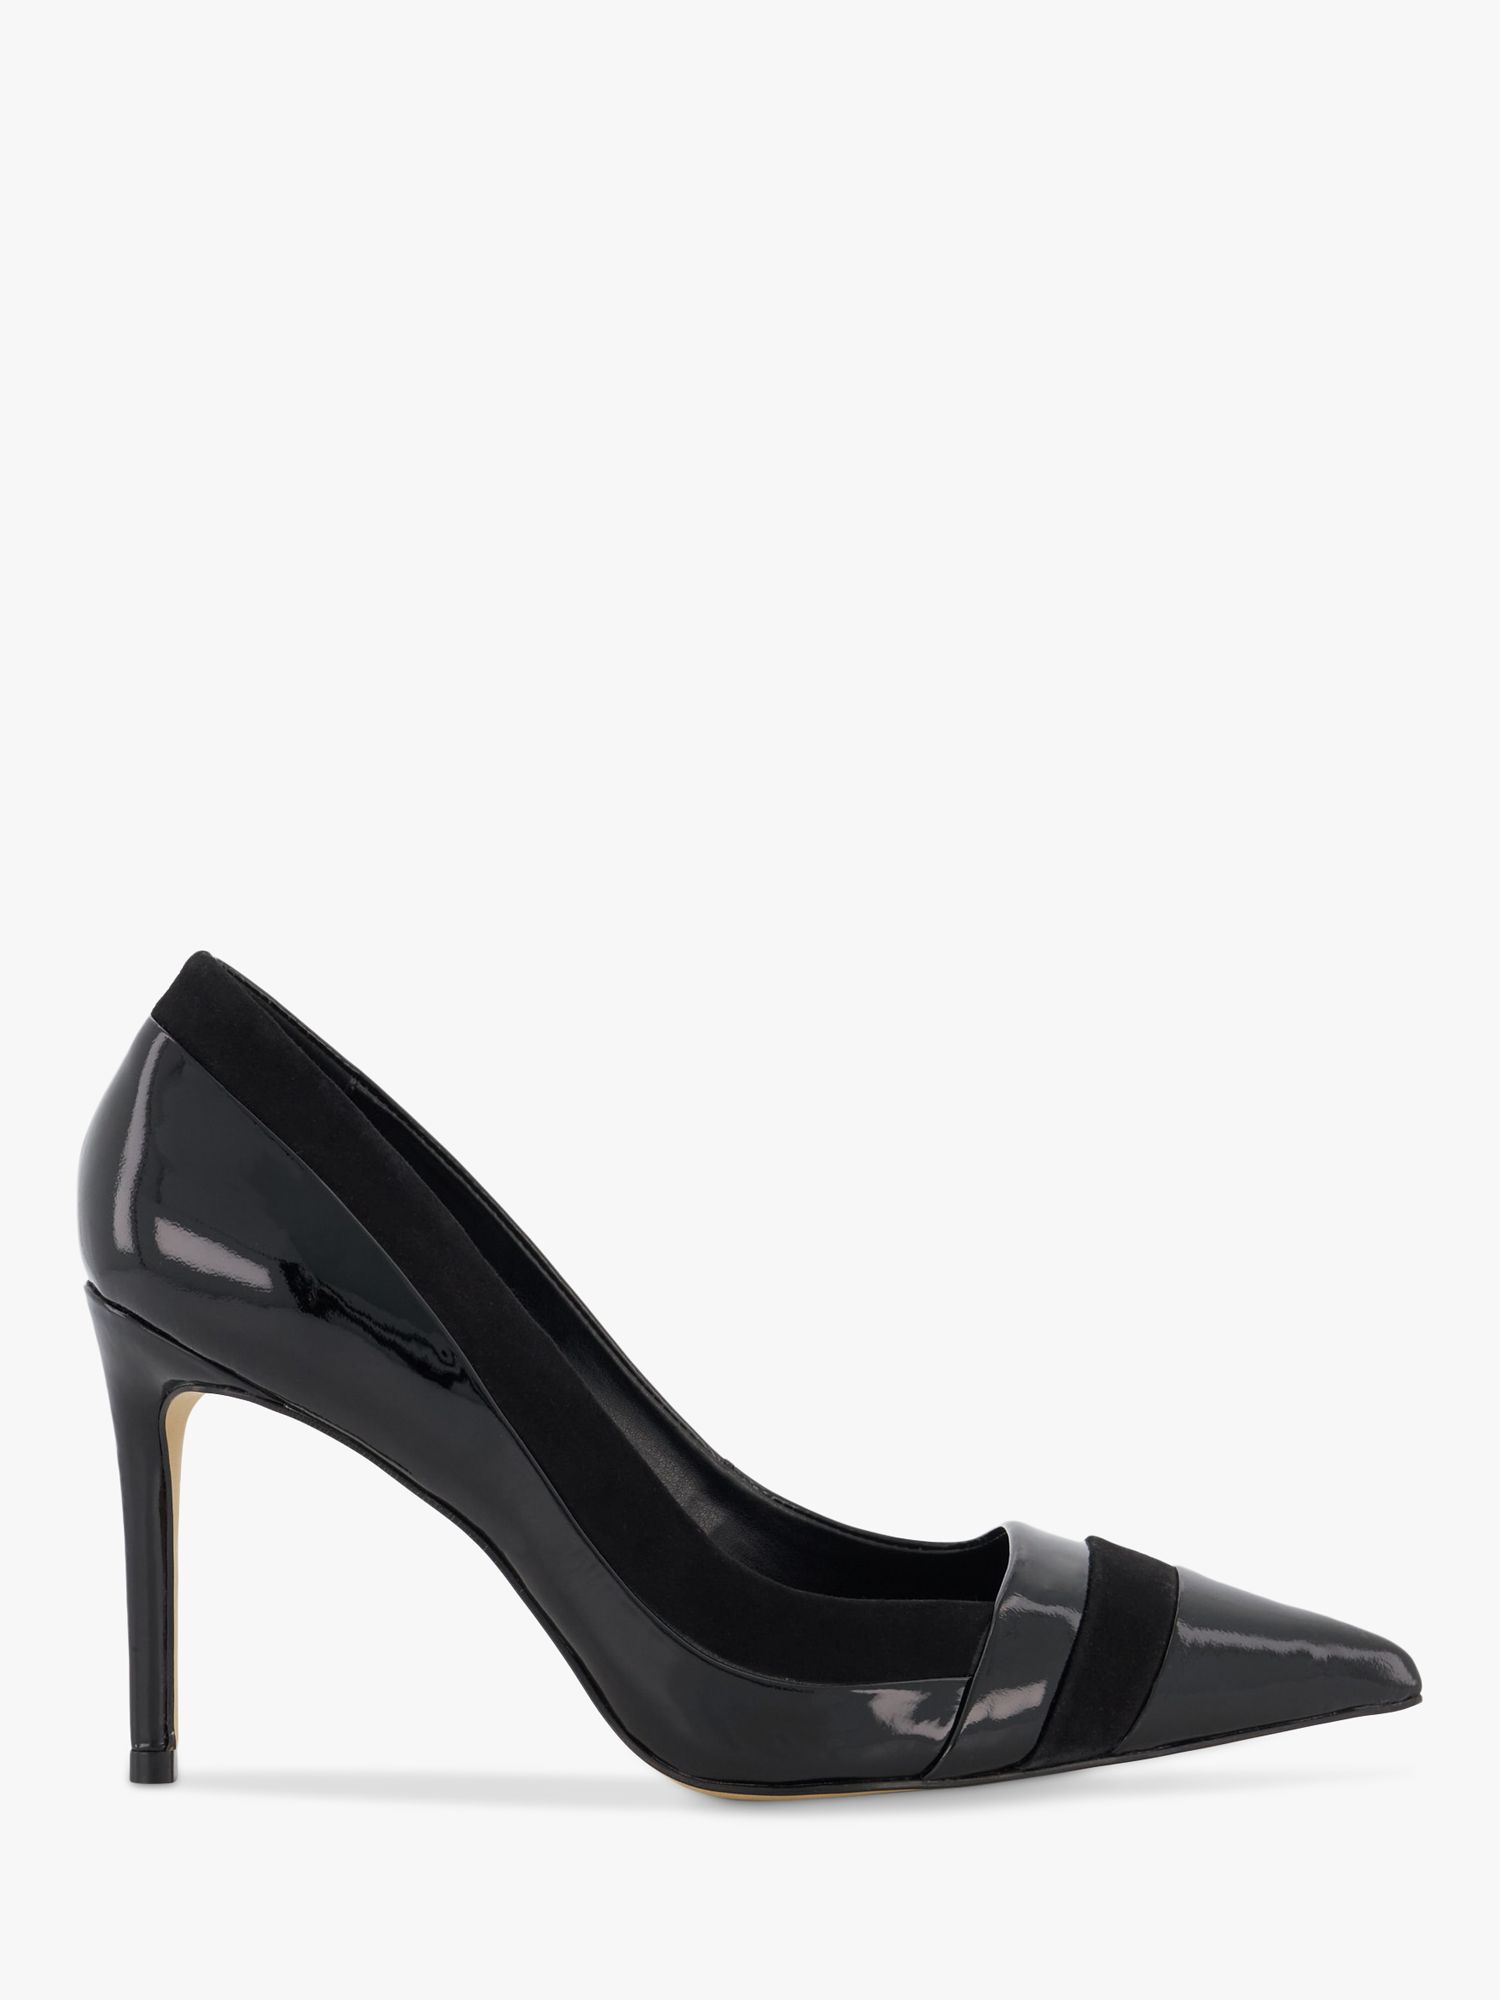 John Lewis Women's Black Leather Shoes Size 37 Eu 6.5 -  Norway